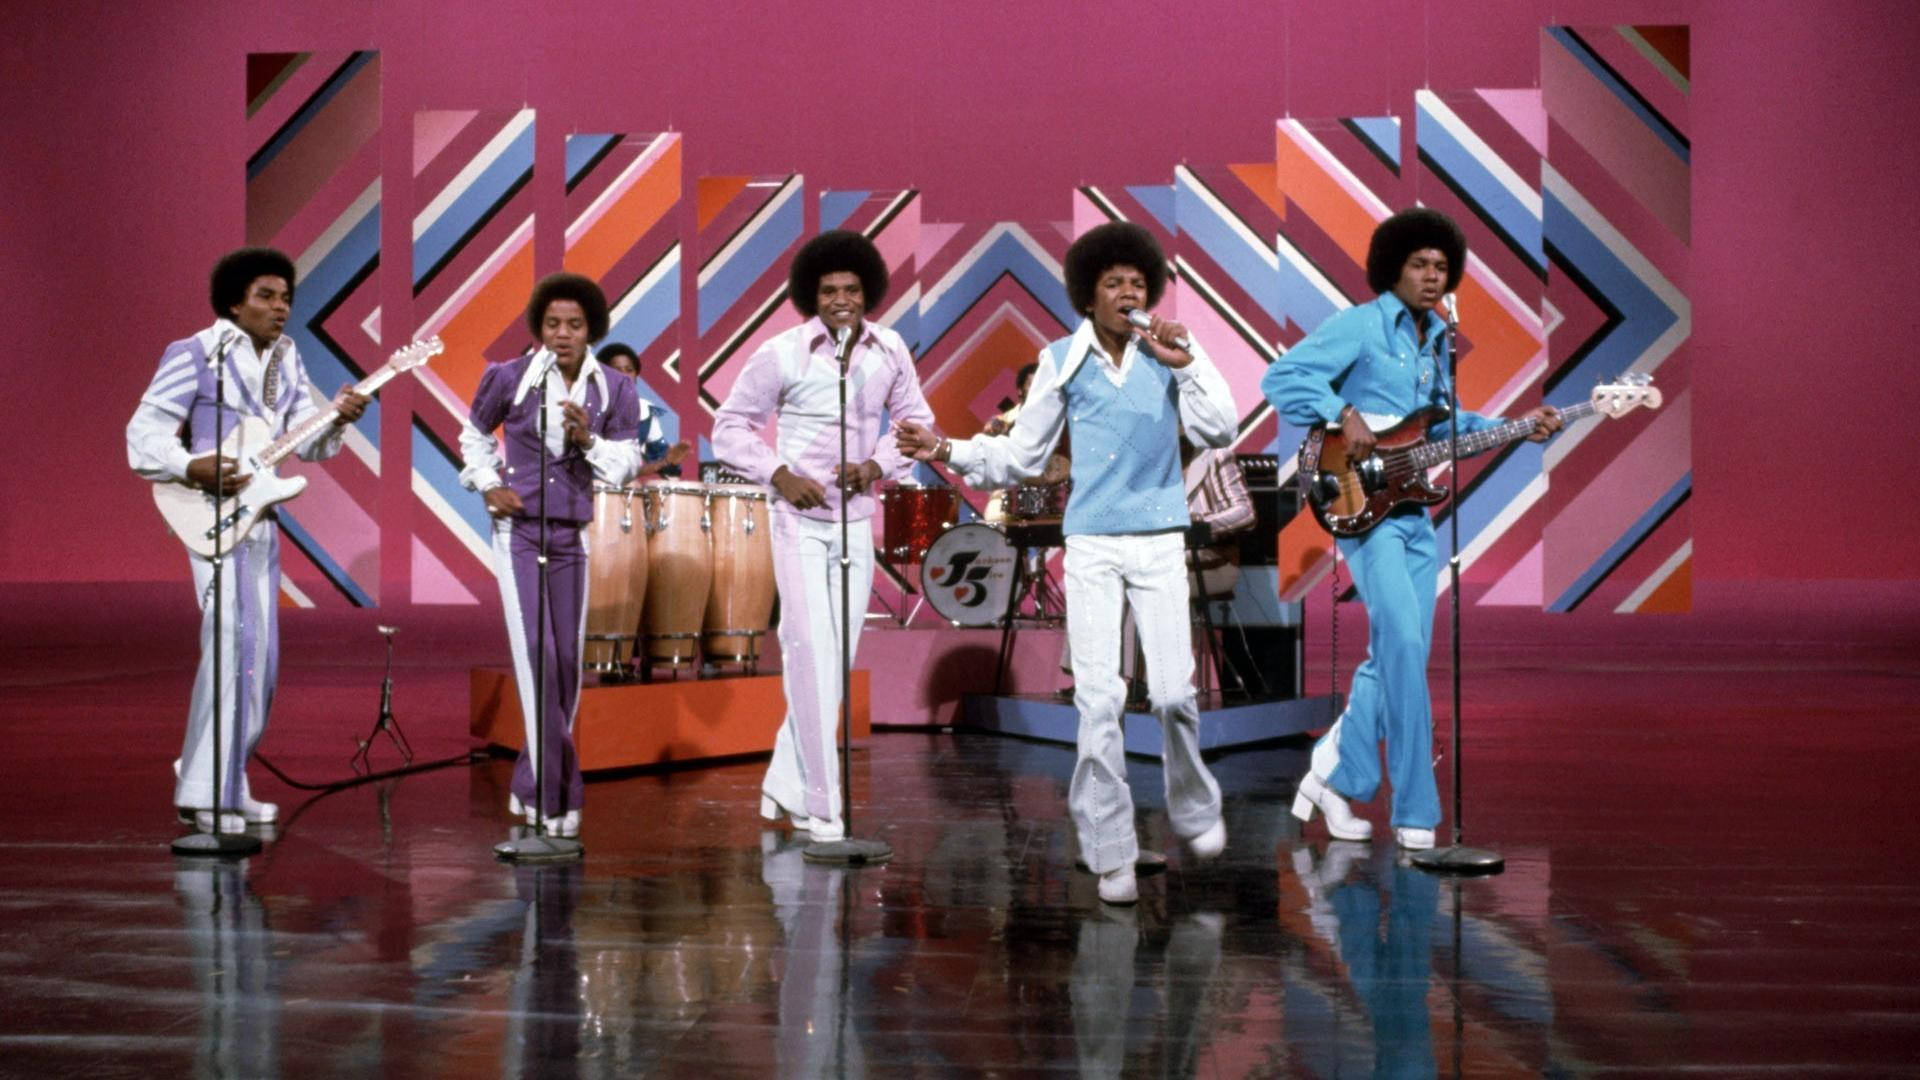 American Pop Band Jackson 5 1970 Performance Wallpaper